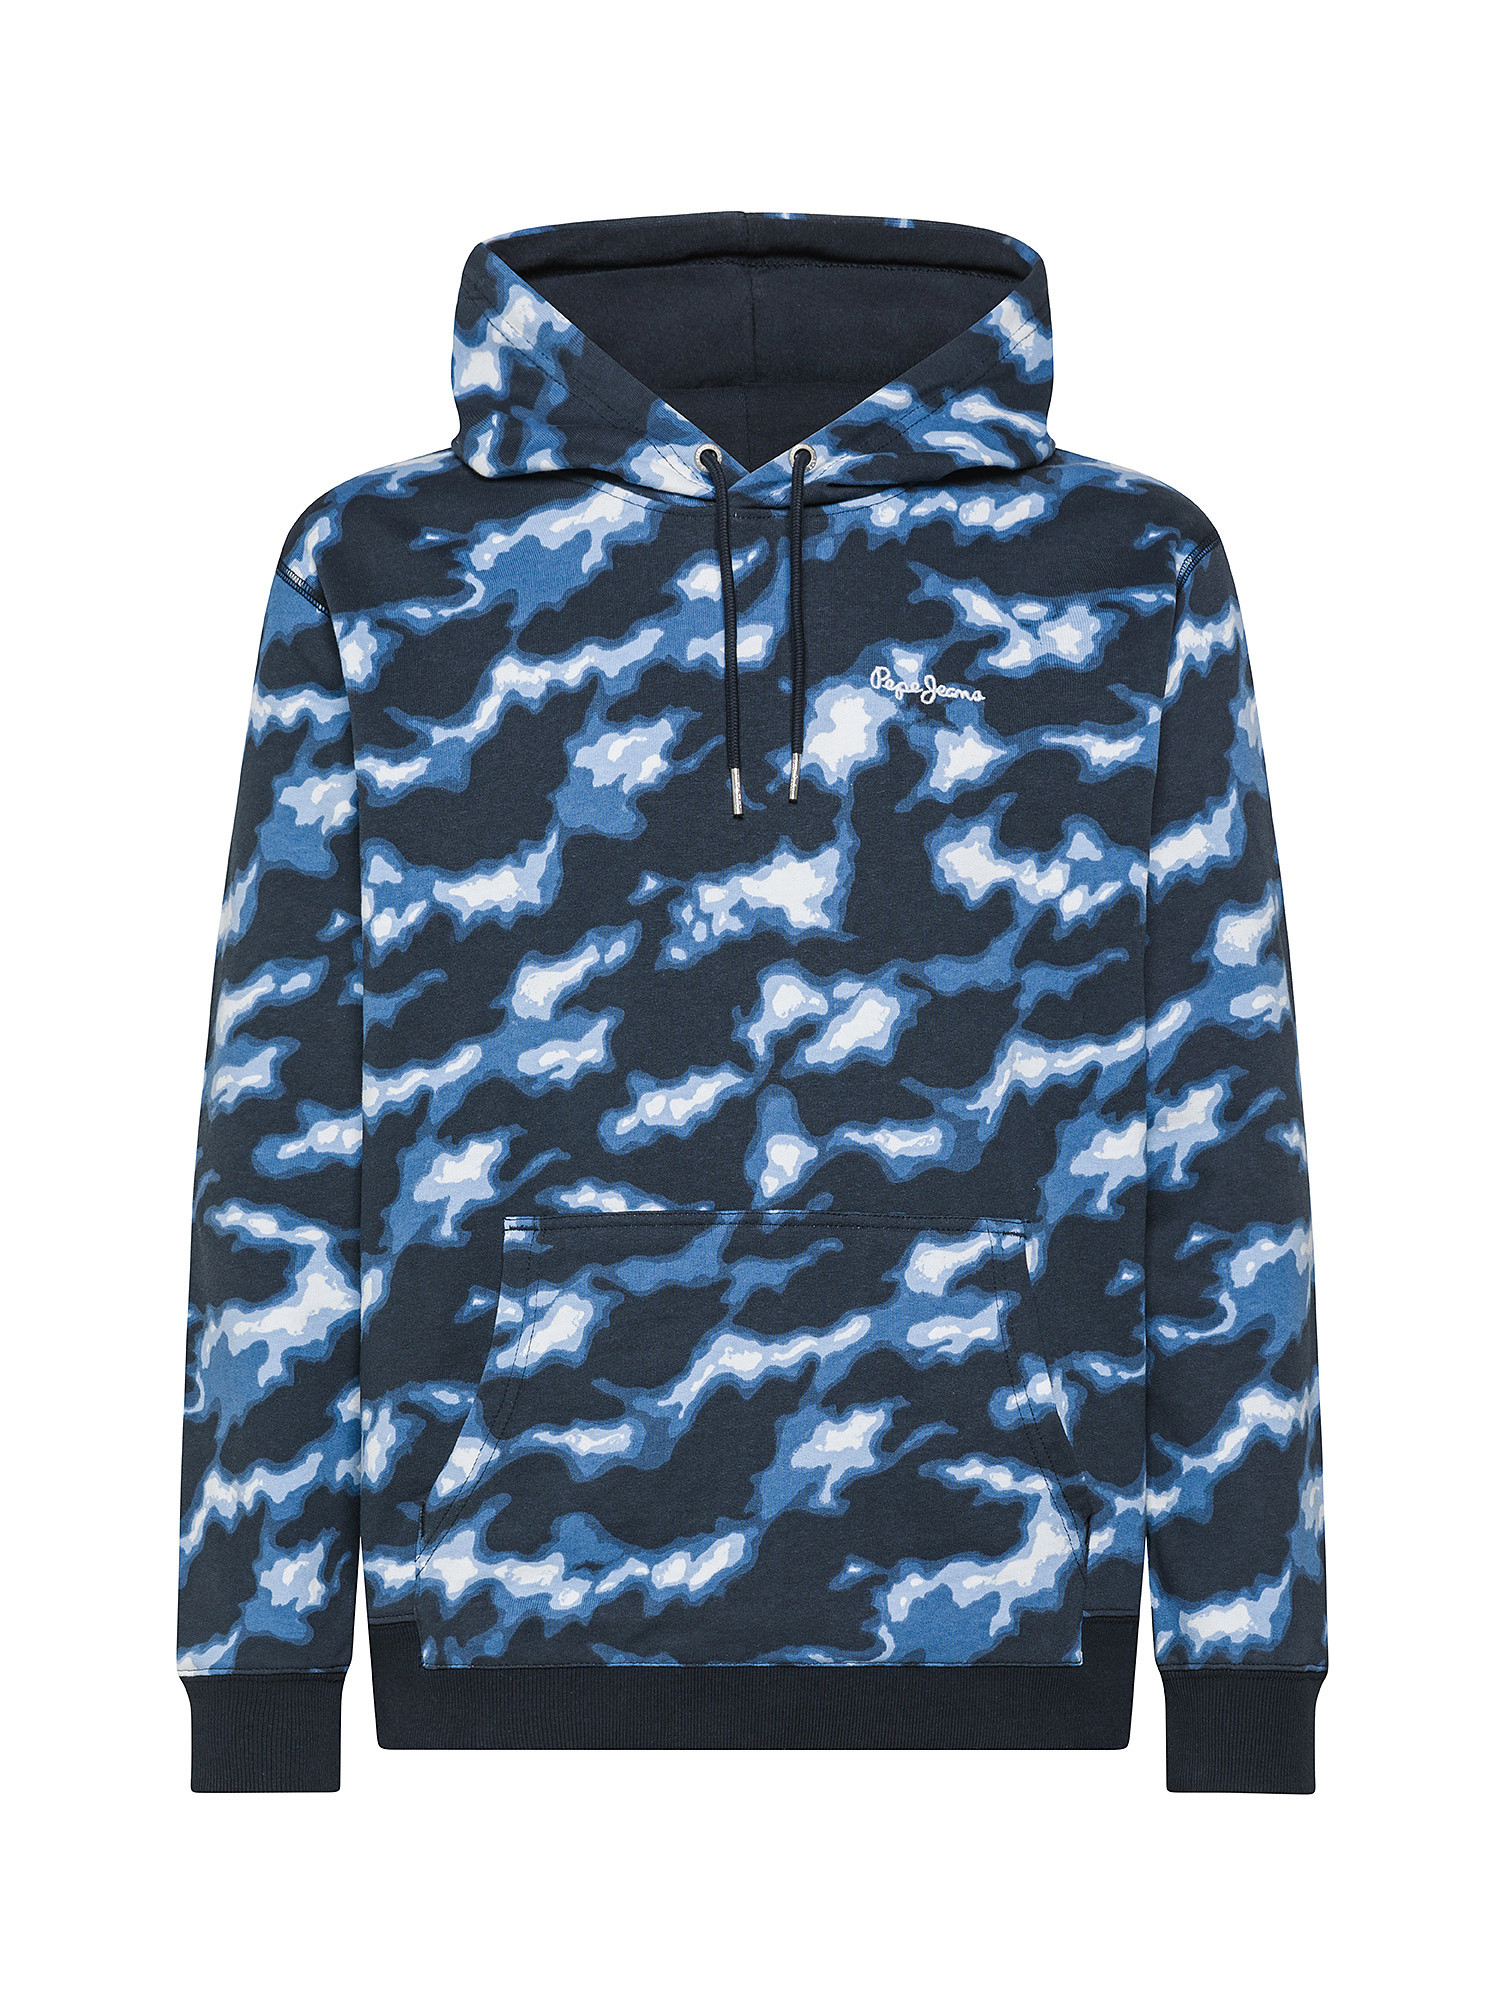 Pepe Jeans - Sweatshirt with camouflage print, Dark Blue, large image number 0